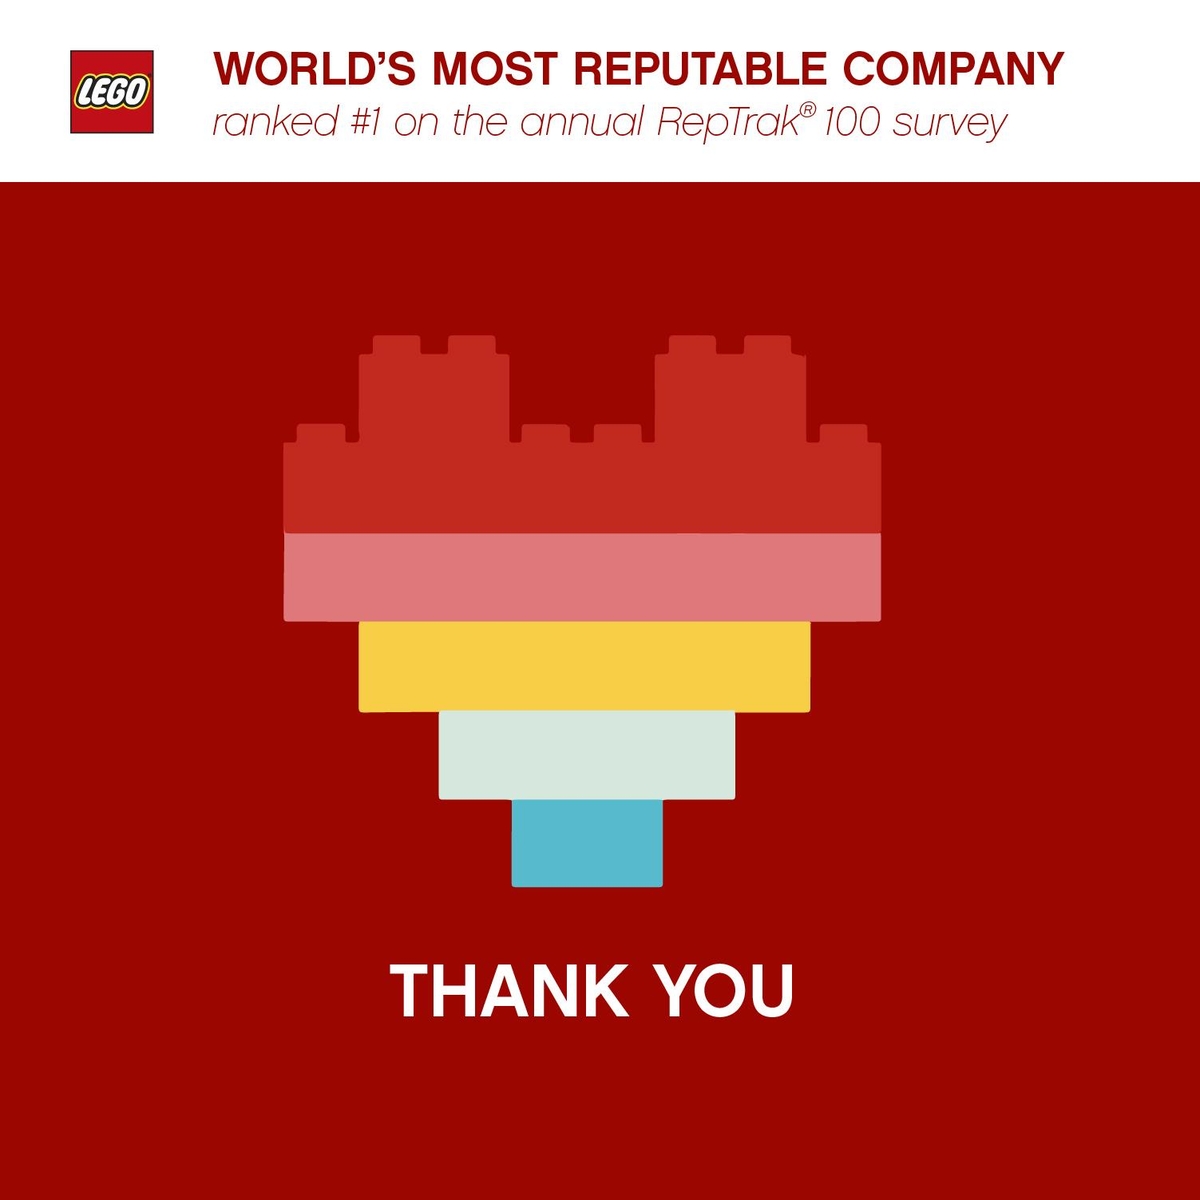 most reputable - Careers - LEGO.com